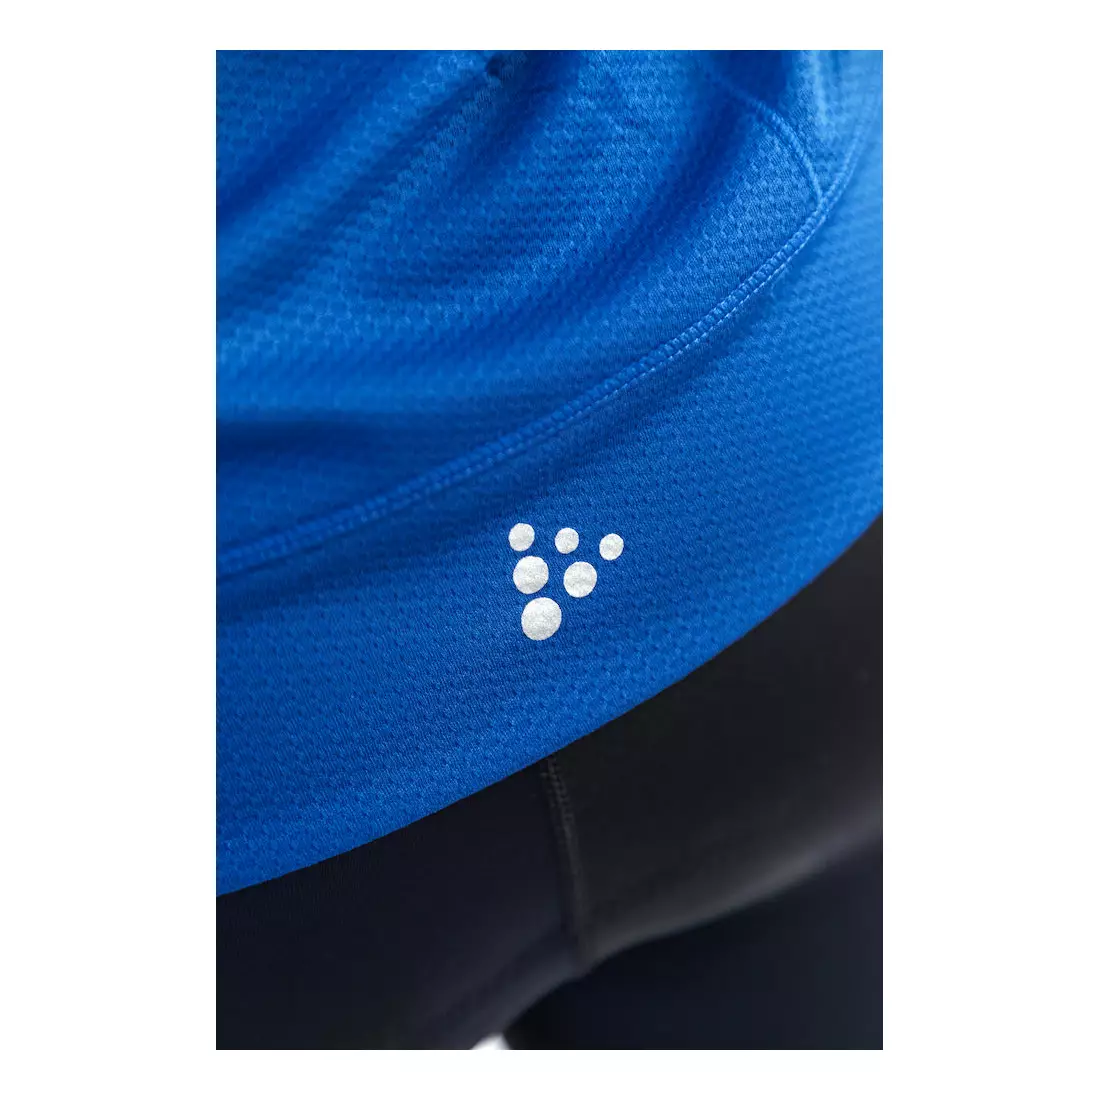 CRAFT RISE women's cycling jersey, blue, 1906075-367352